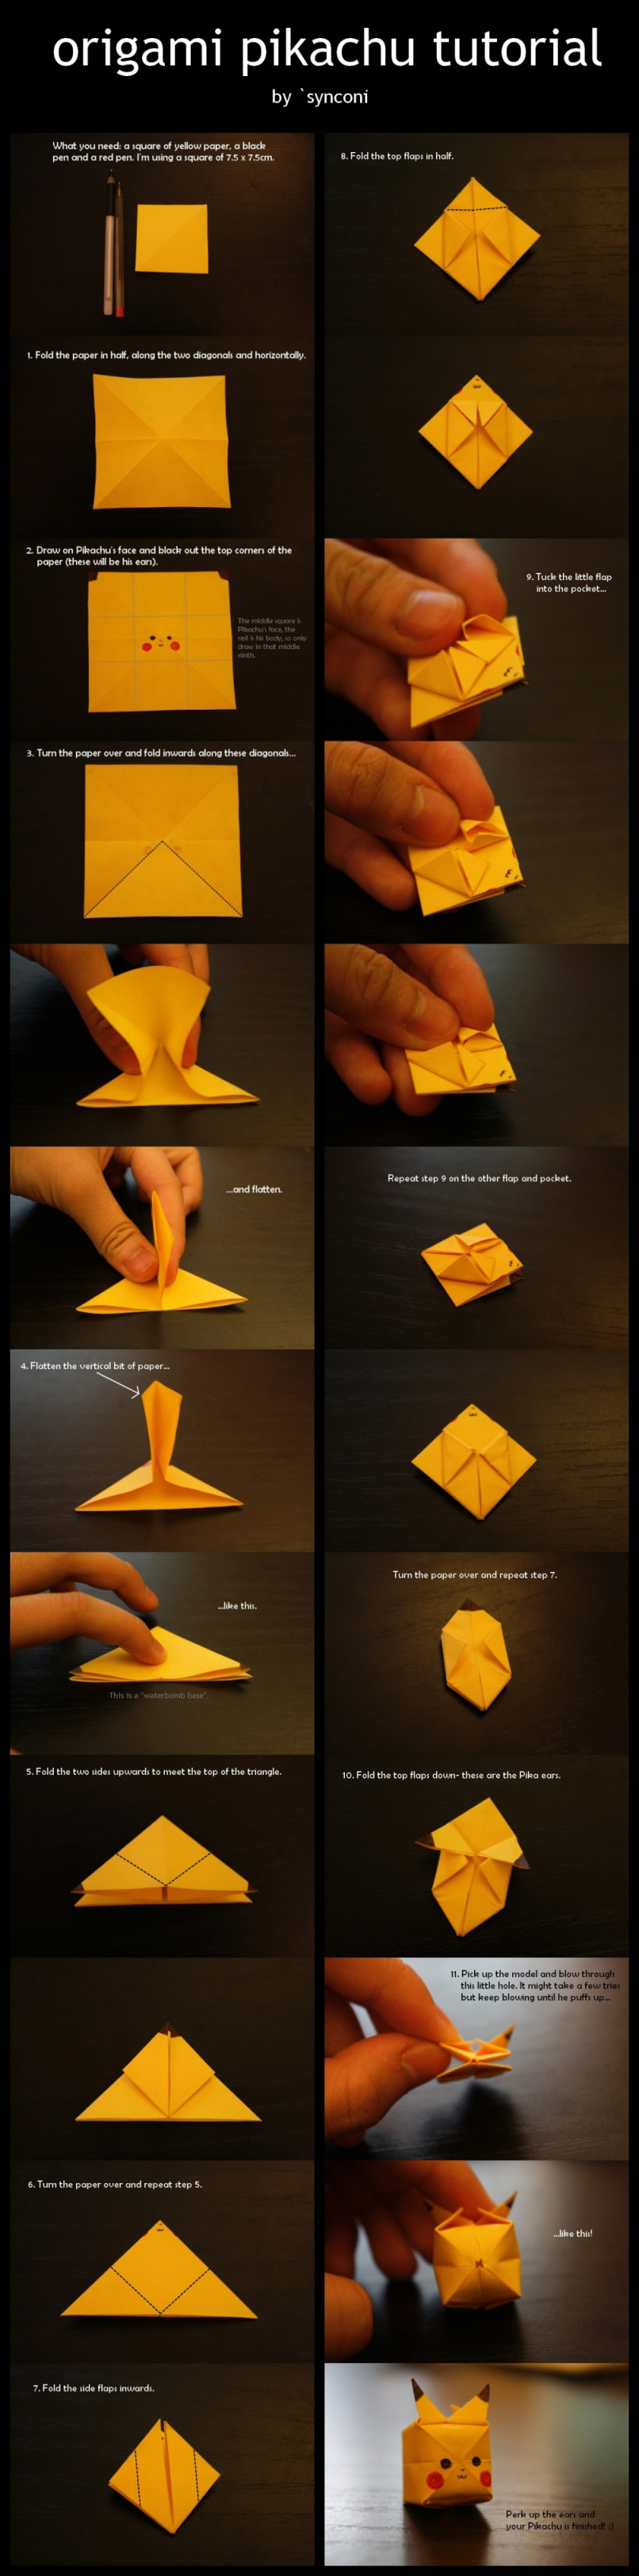 origami pikachu instructions